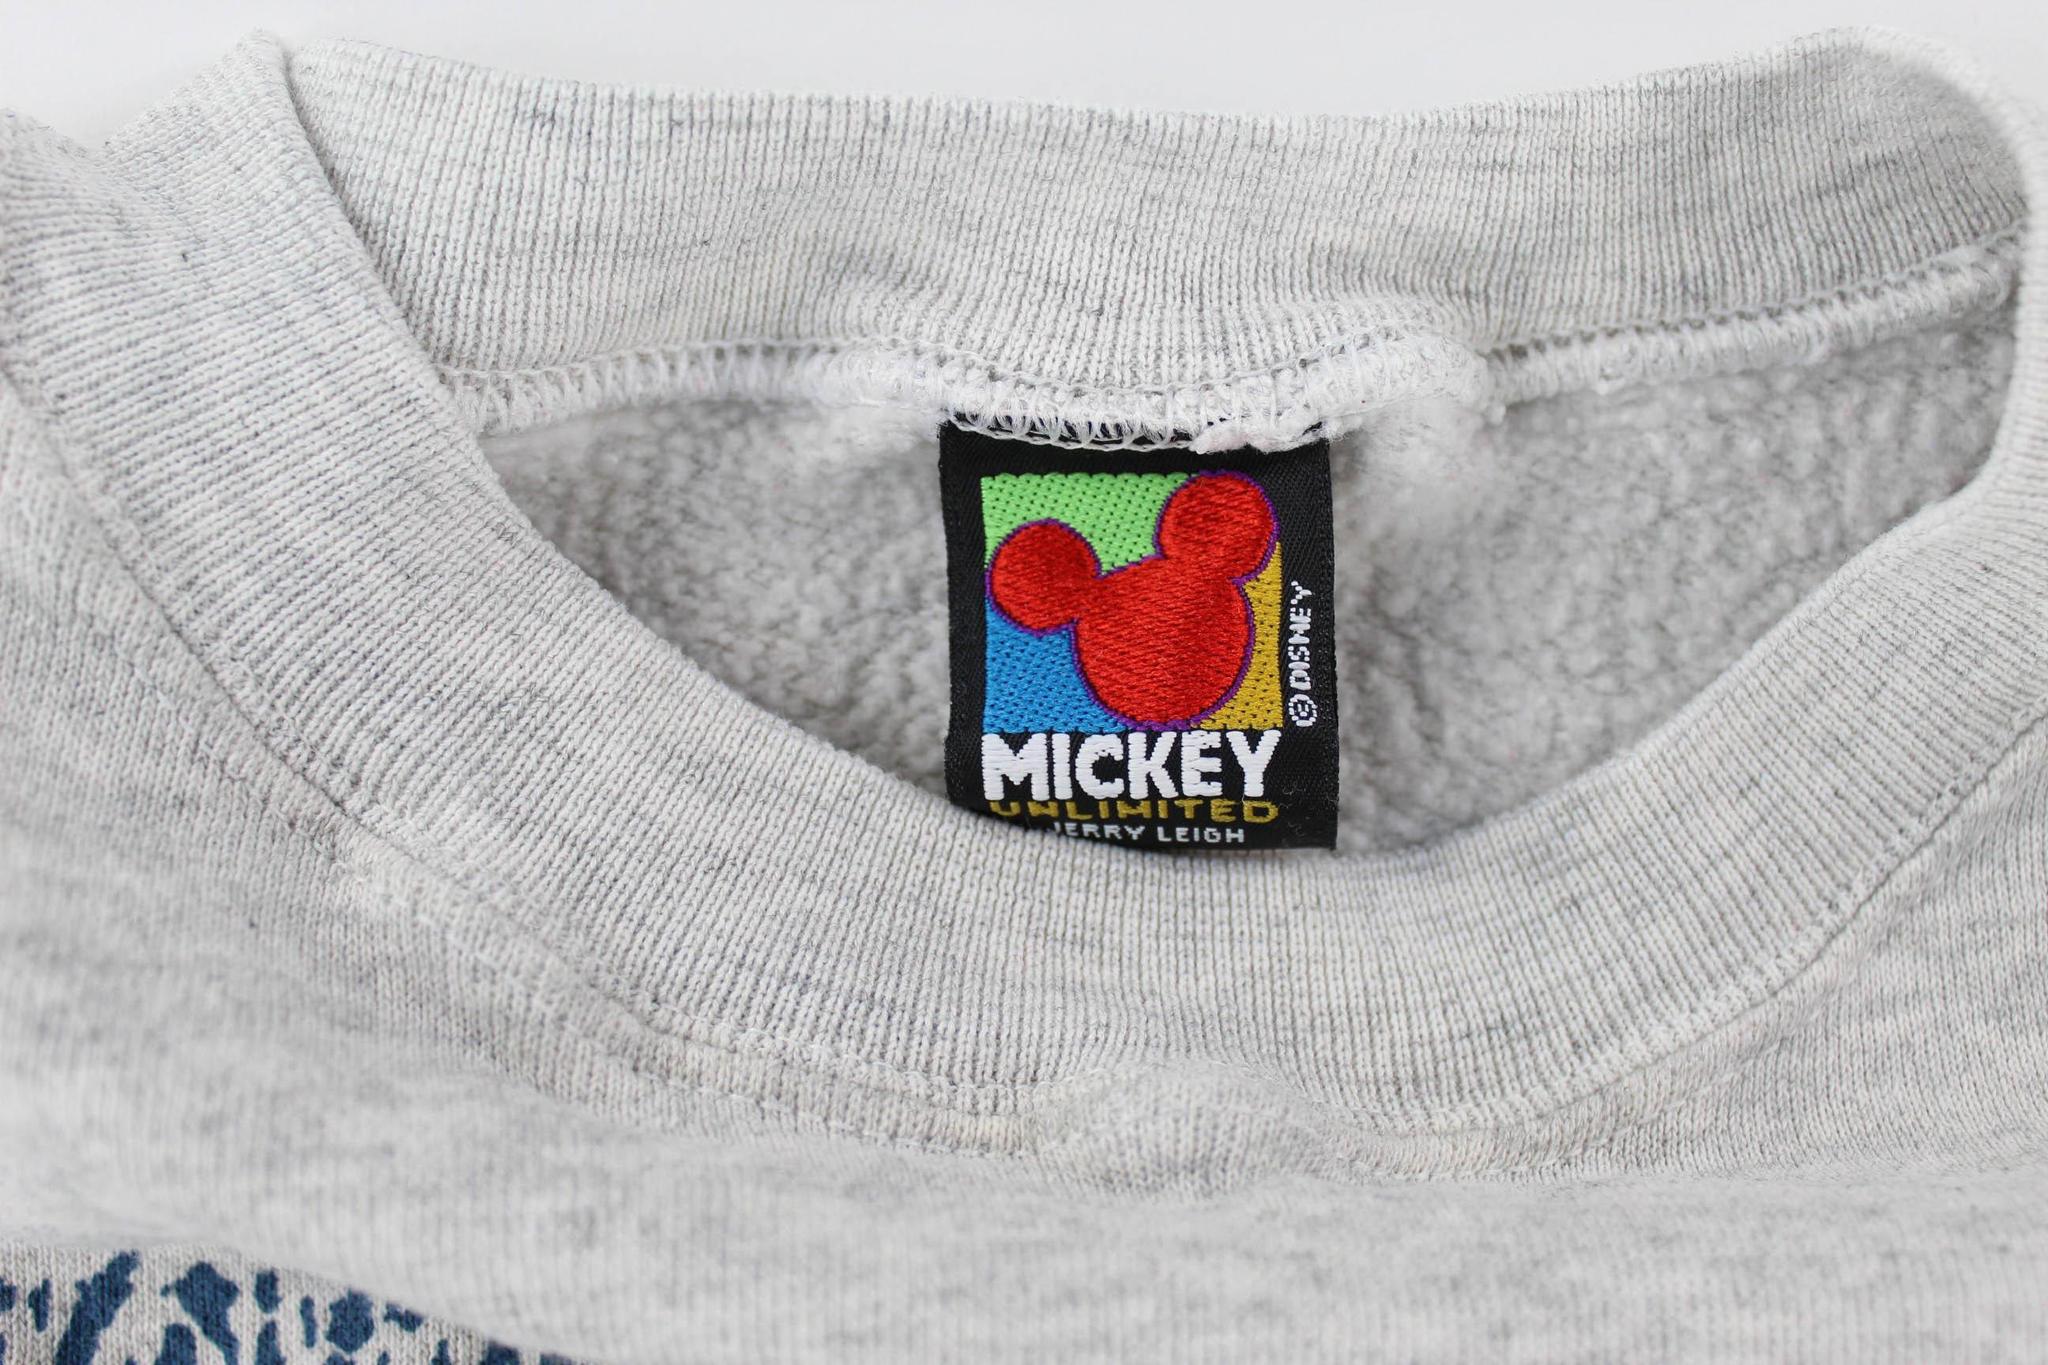 Mickey Unlimited "Mickey" Sweatshirt - ThriftedThreads.com